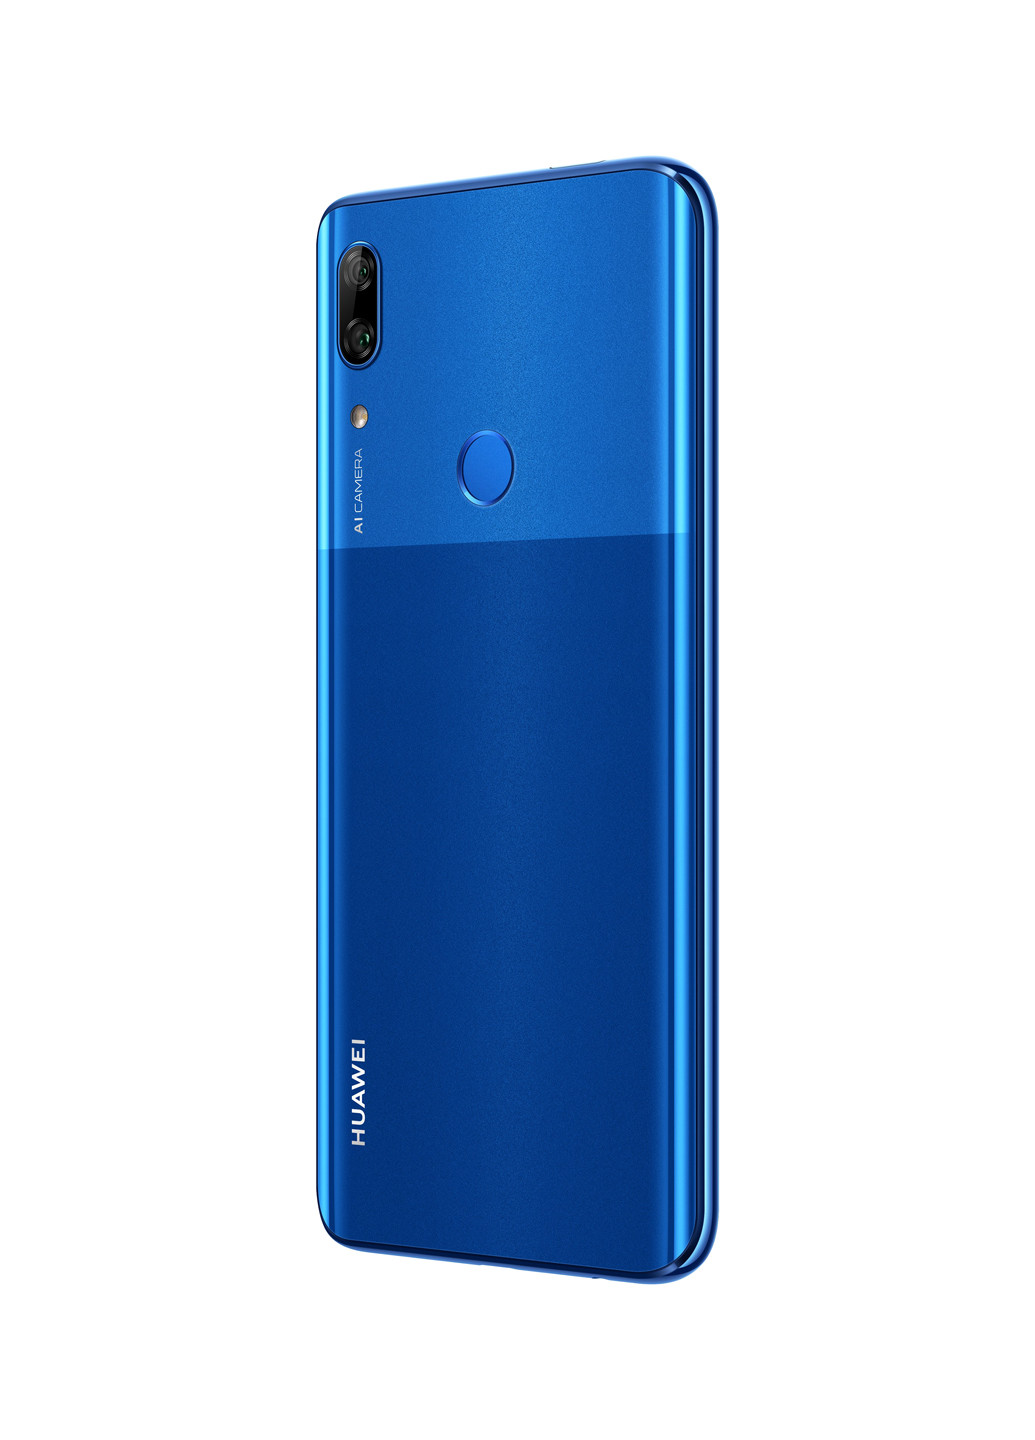 Смартфон Huawei p smart z 4/64gb blue (stk-lx1) (135191298)